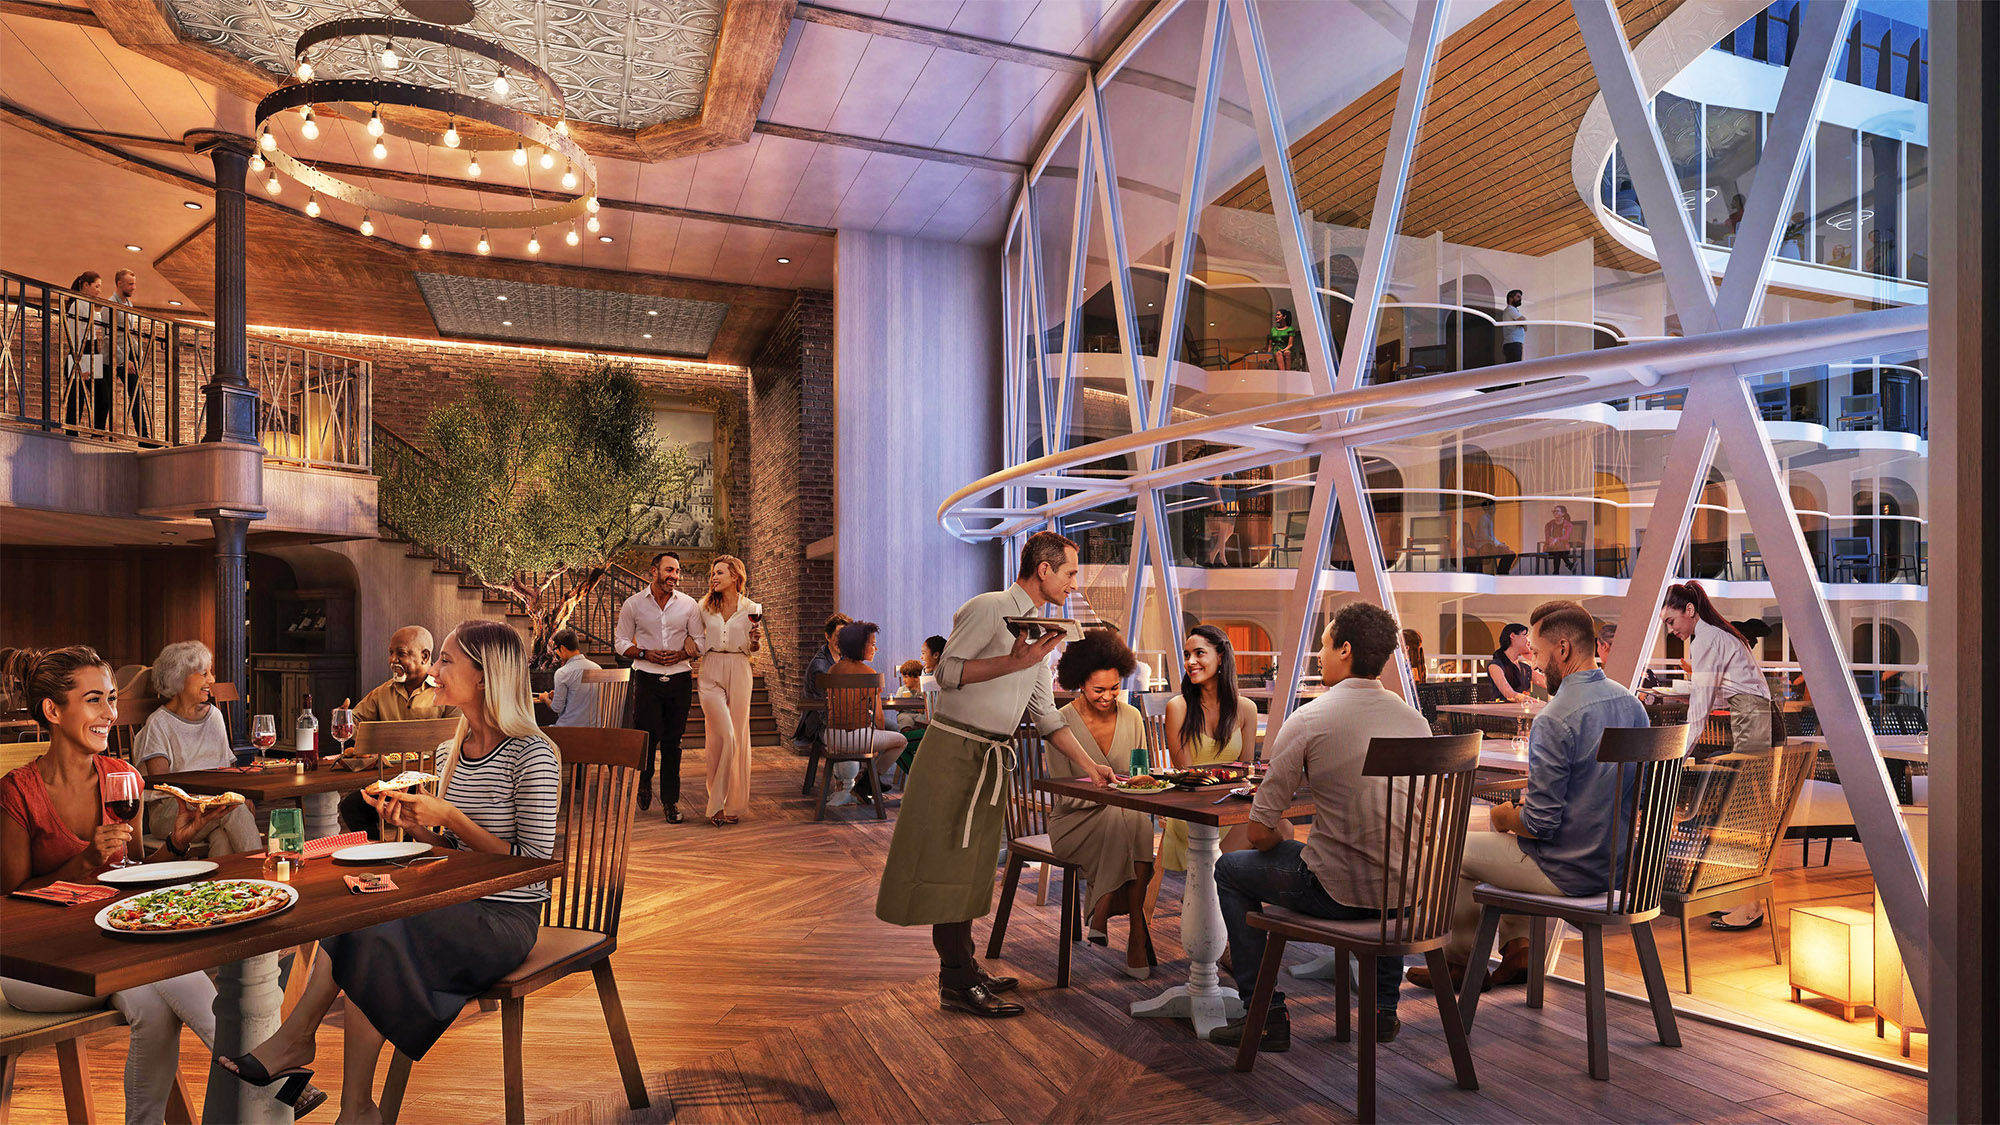 Giovanni's Italian Kitchen & Wine Bar will span two decks on Utopia of the Seas.